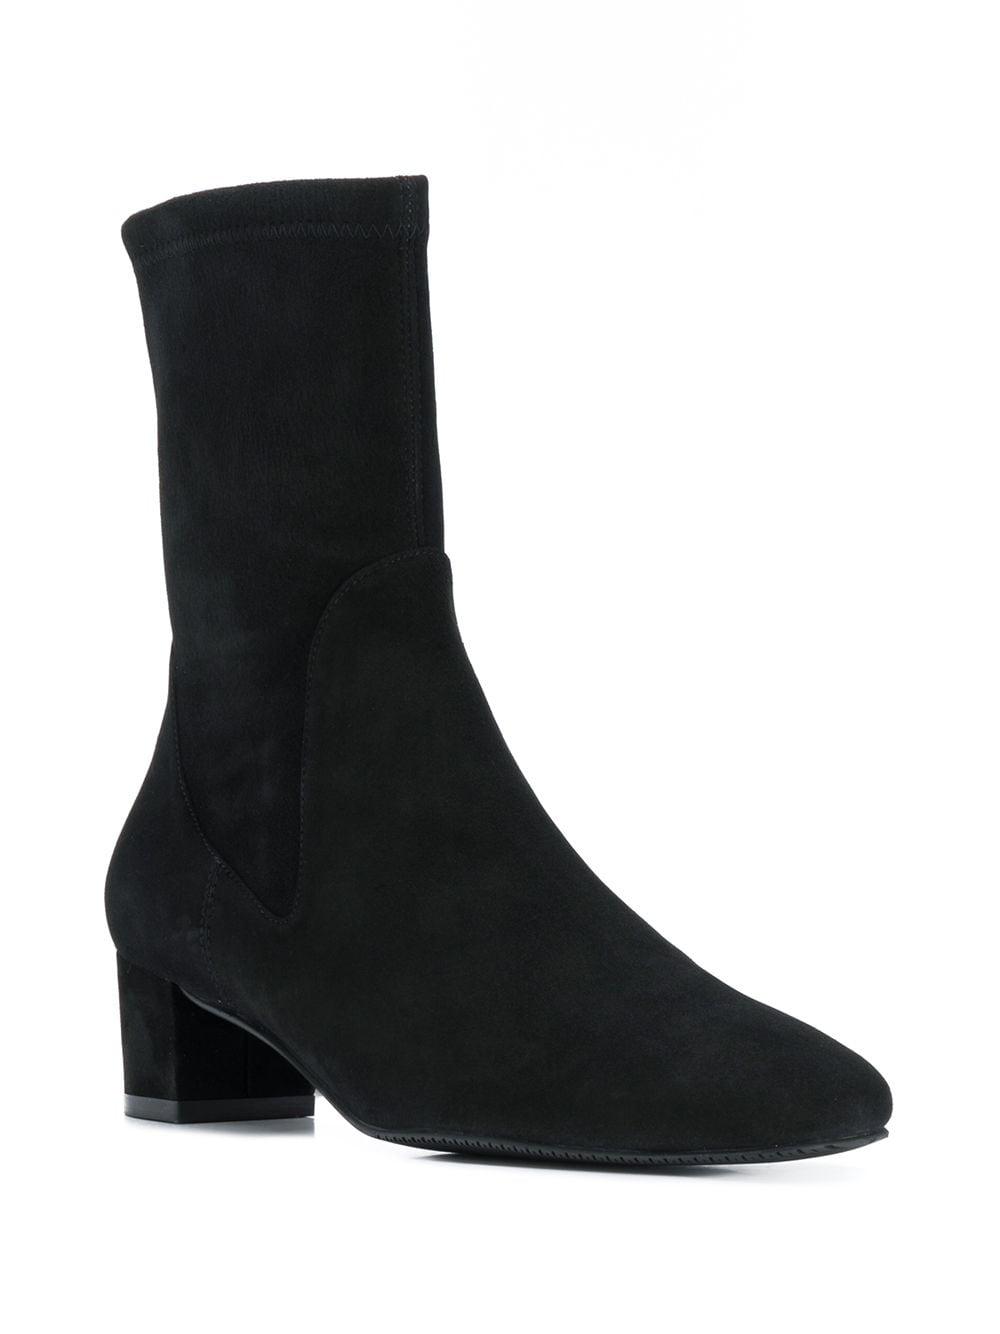 Stuart Weitzman Leather Ernestine Low Heel Boots in Black - Lyst